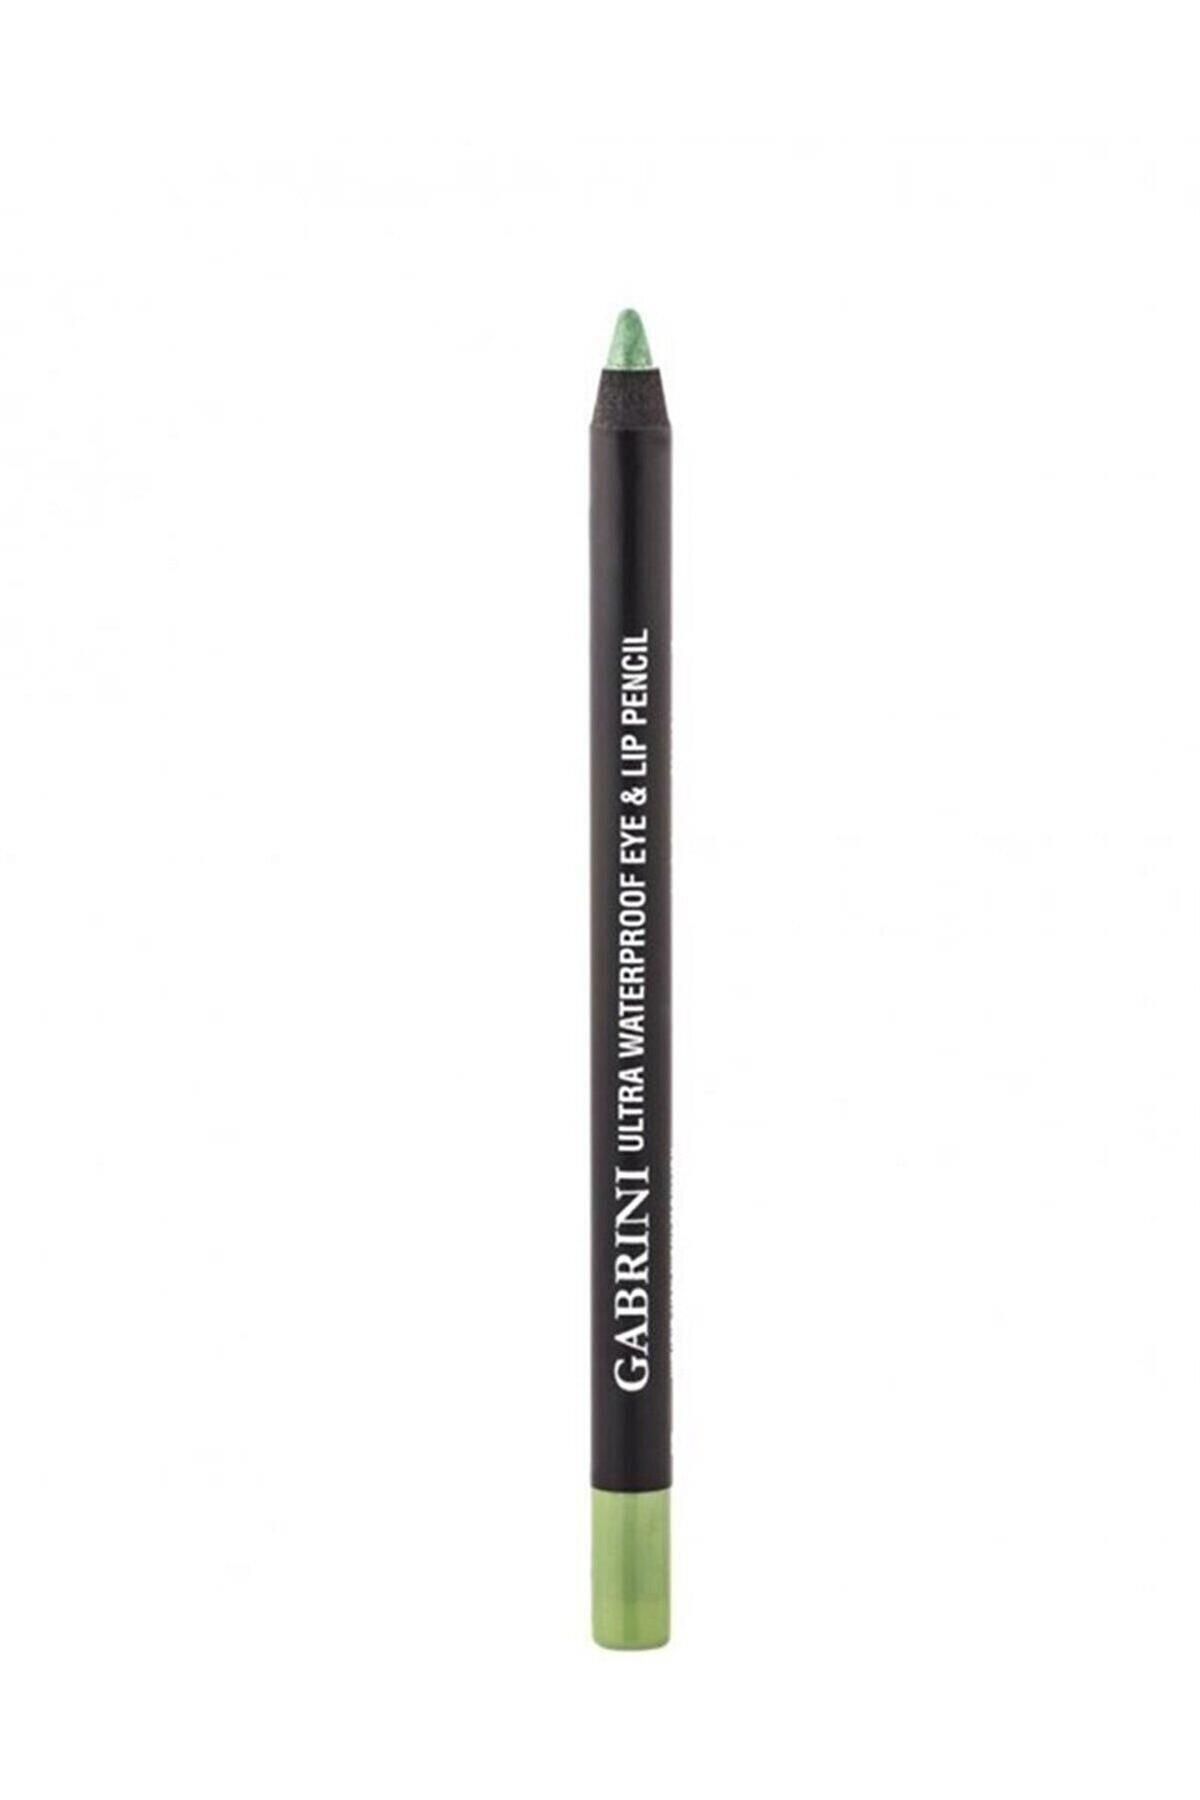 Gabrini Ultra Waterproof Eye & Lip Pencil 08